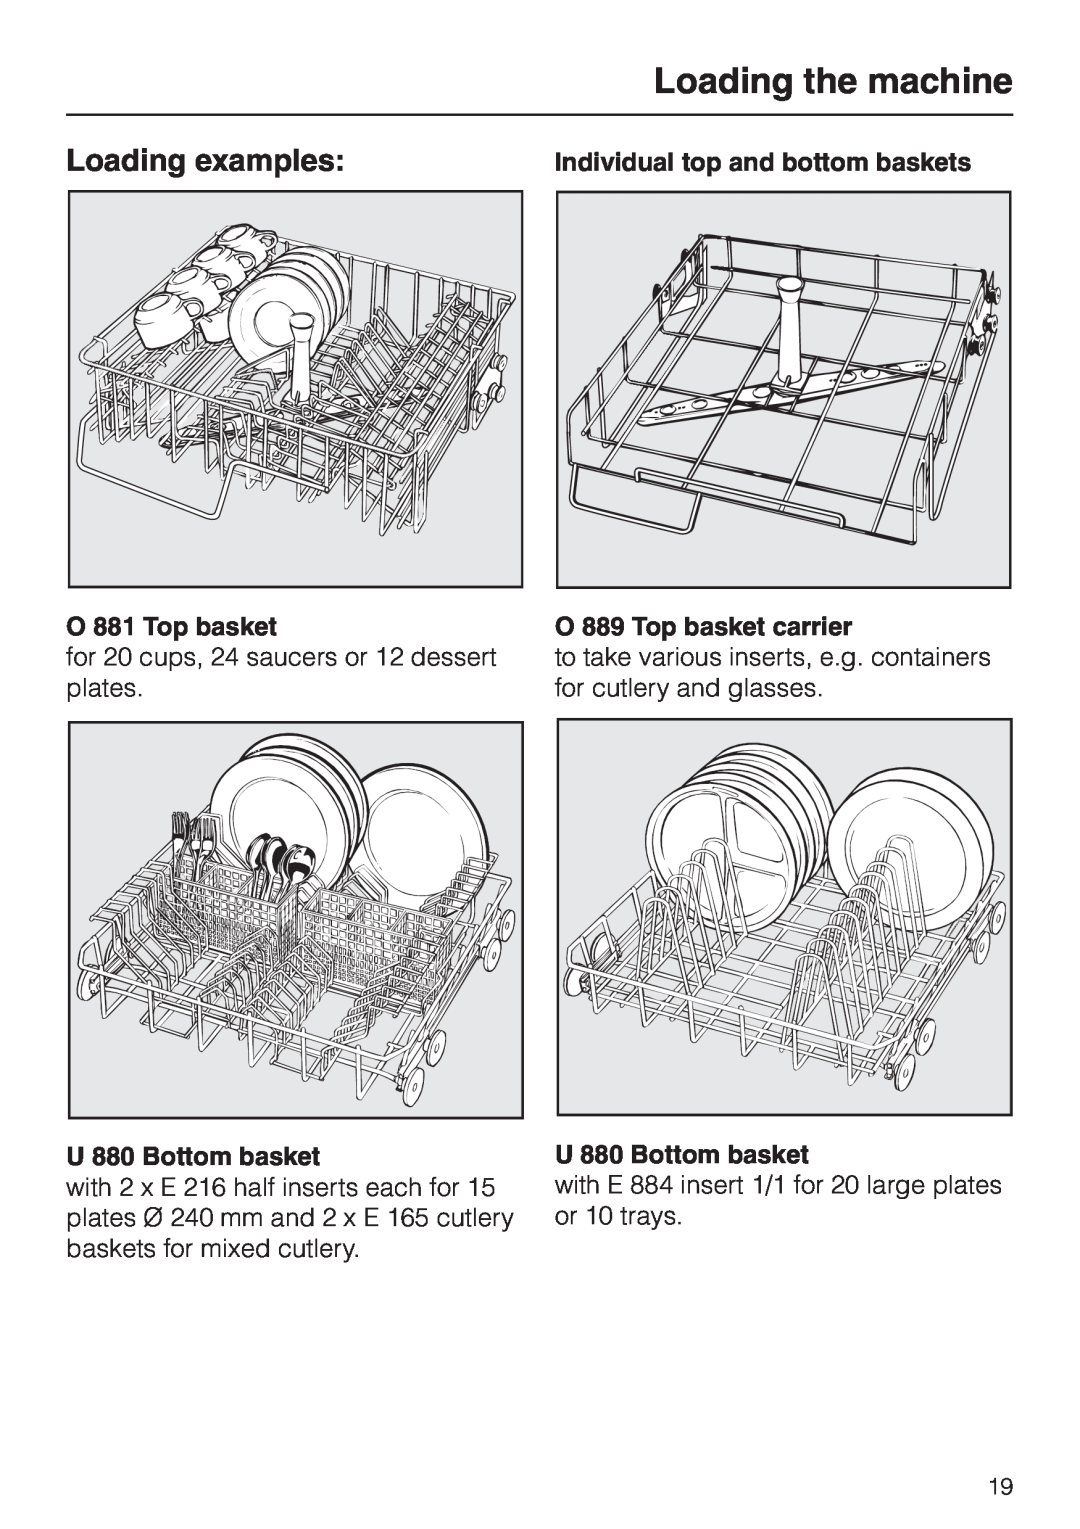 Miele G 7855 manual Loading examples, O 881 Top basket, U 880 Bottom basket, Individual top and bottom baskets 